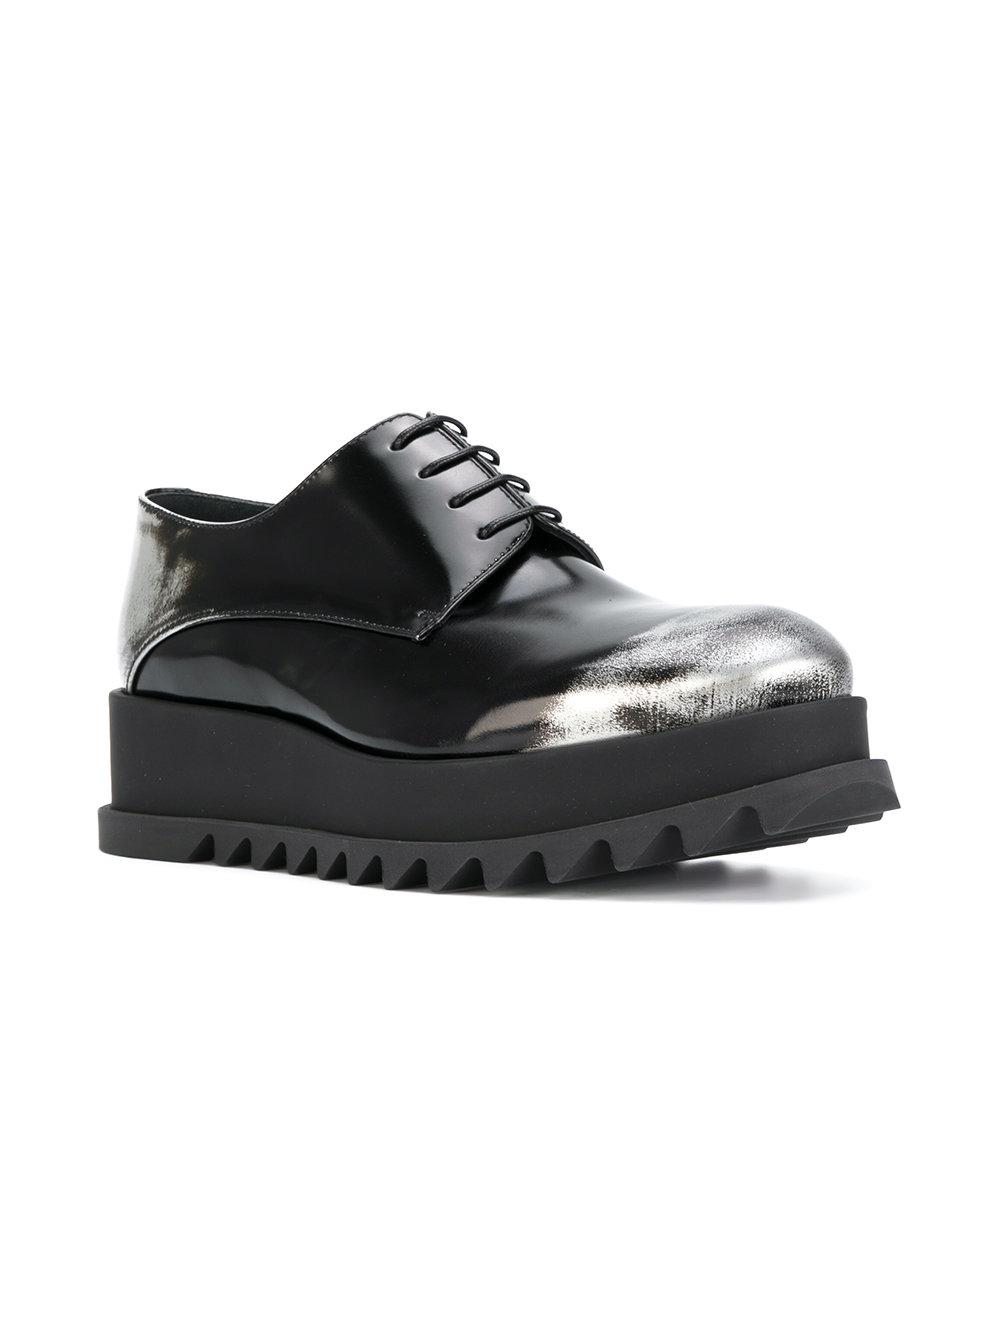 Lyst Jil Sander Ridged Sole Laceup Shoes in Black